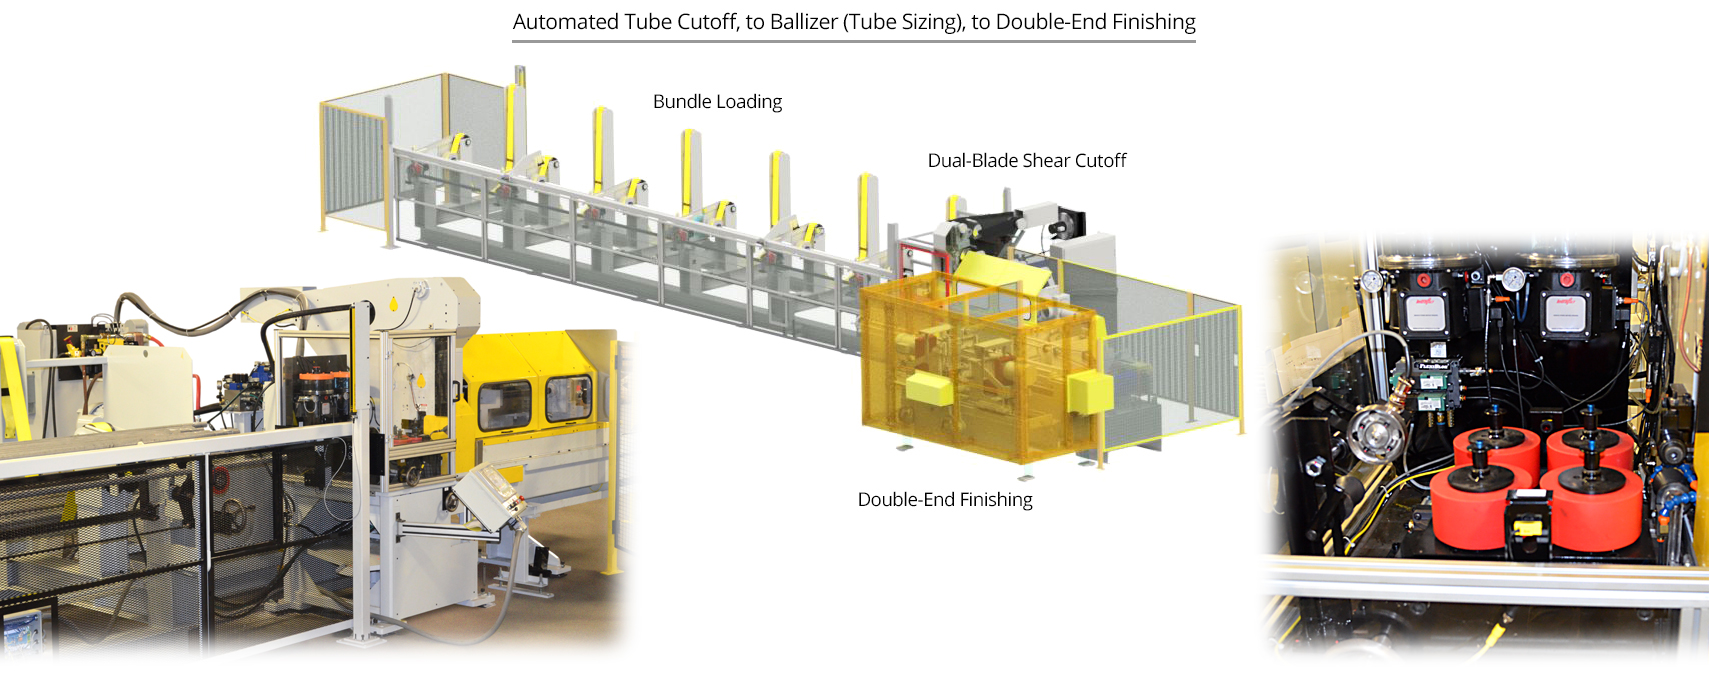 Automated Tube Cutoff